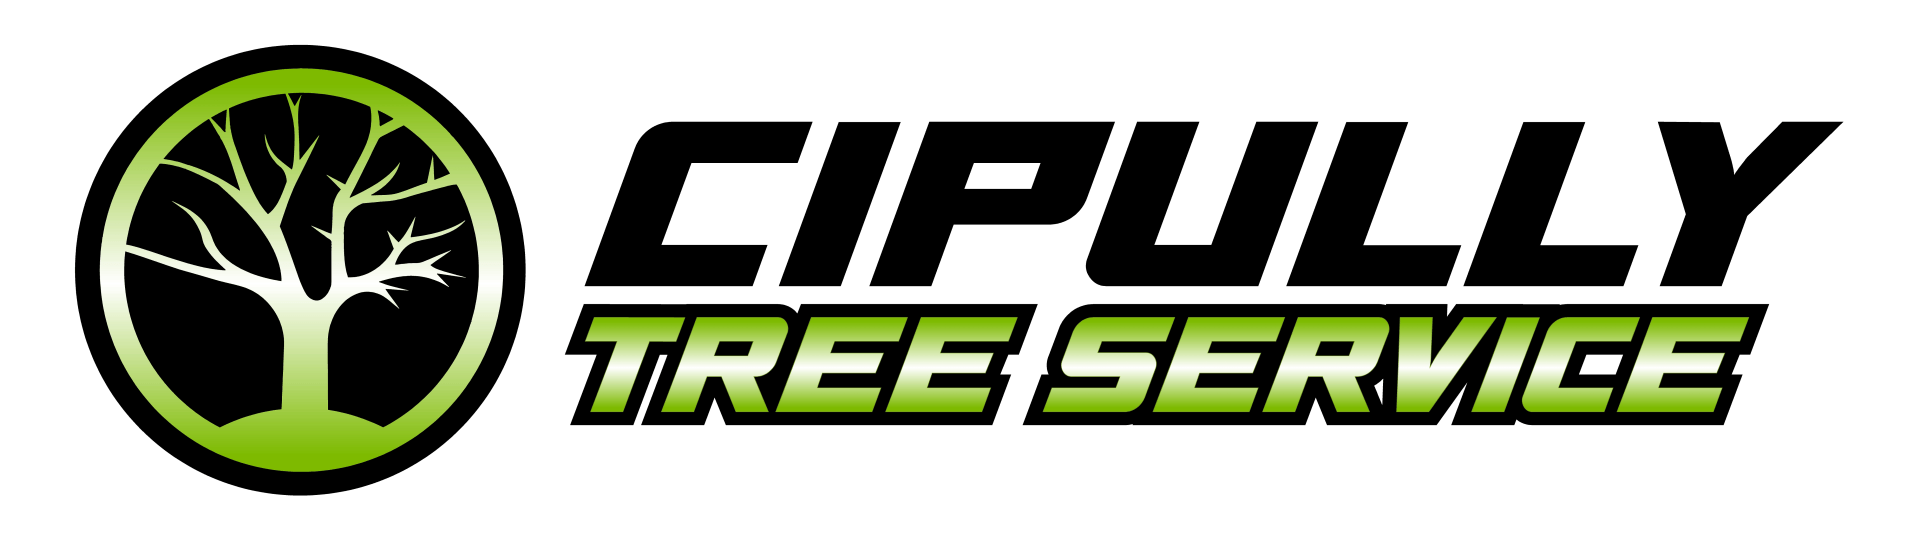 Cipully Tree Service LLC logo